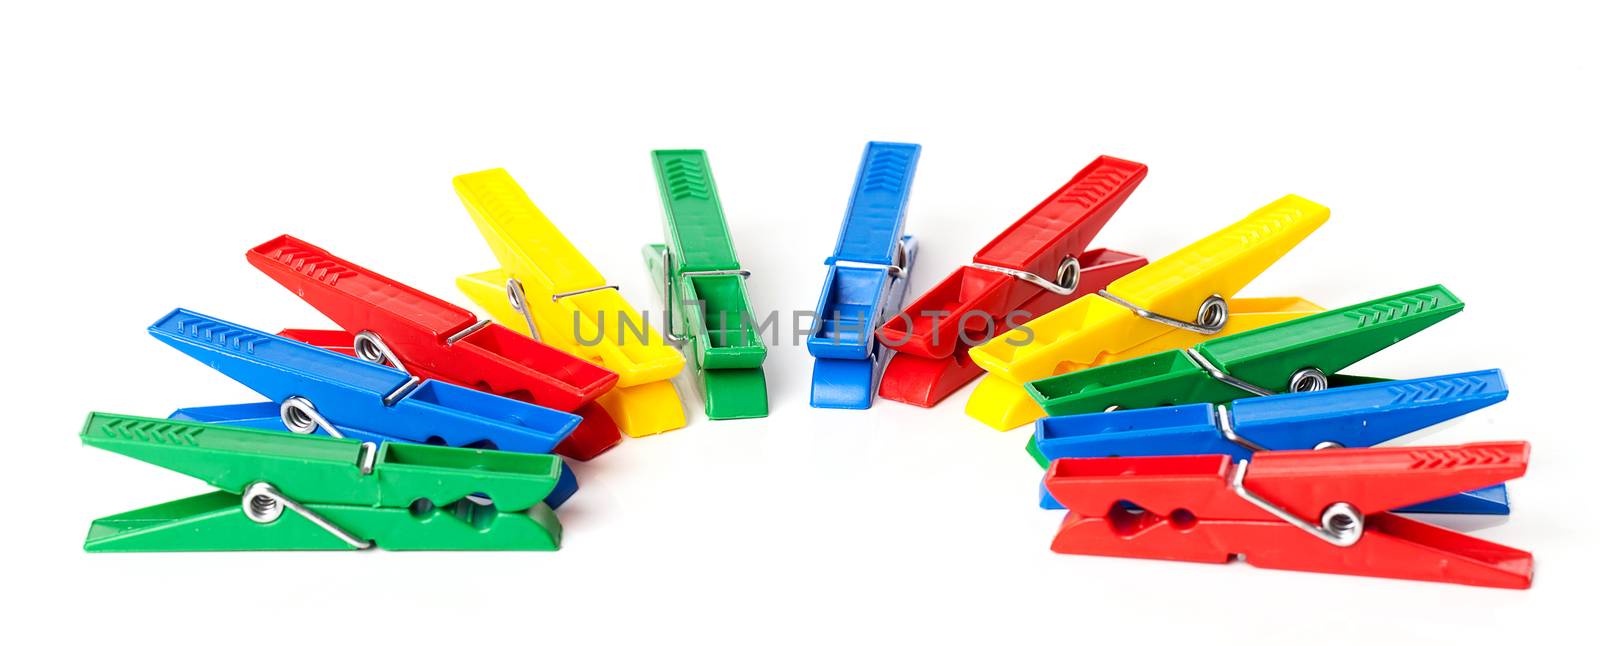 Closeup image of colorful clothespins by rufatjumali